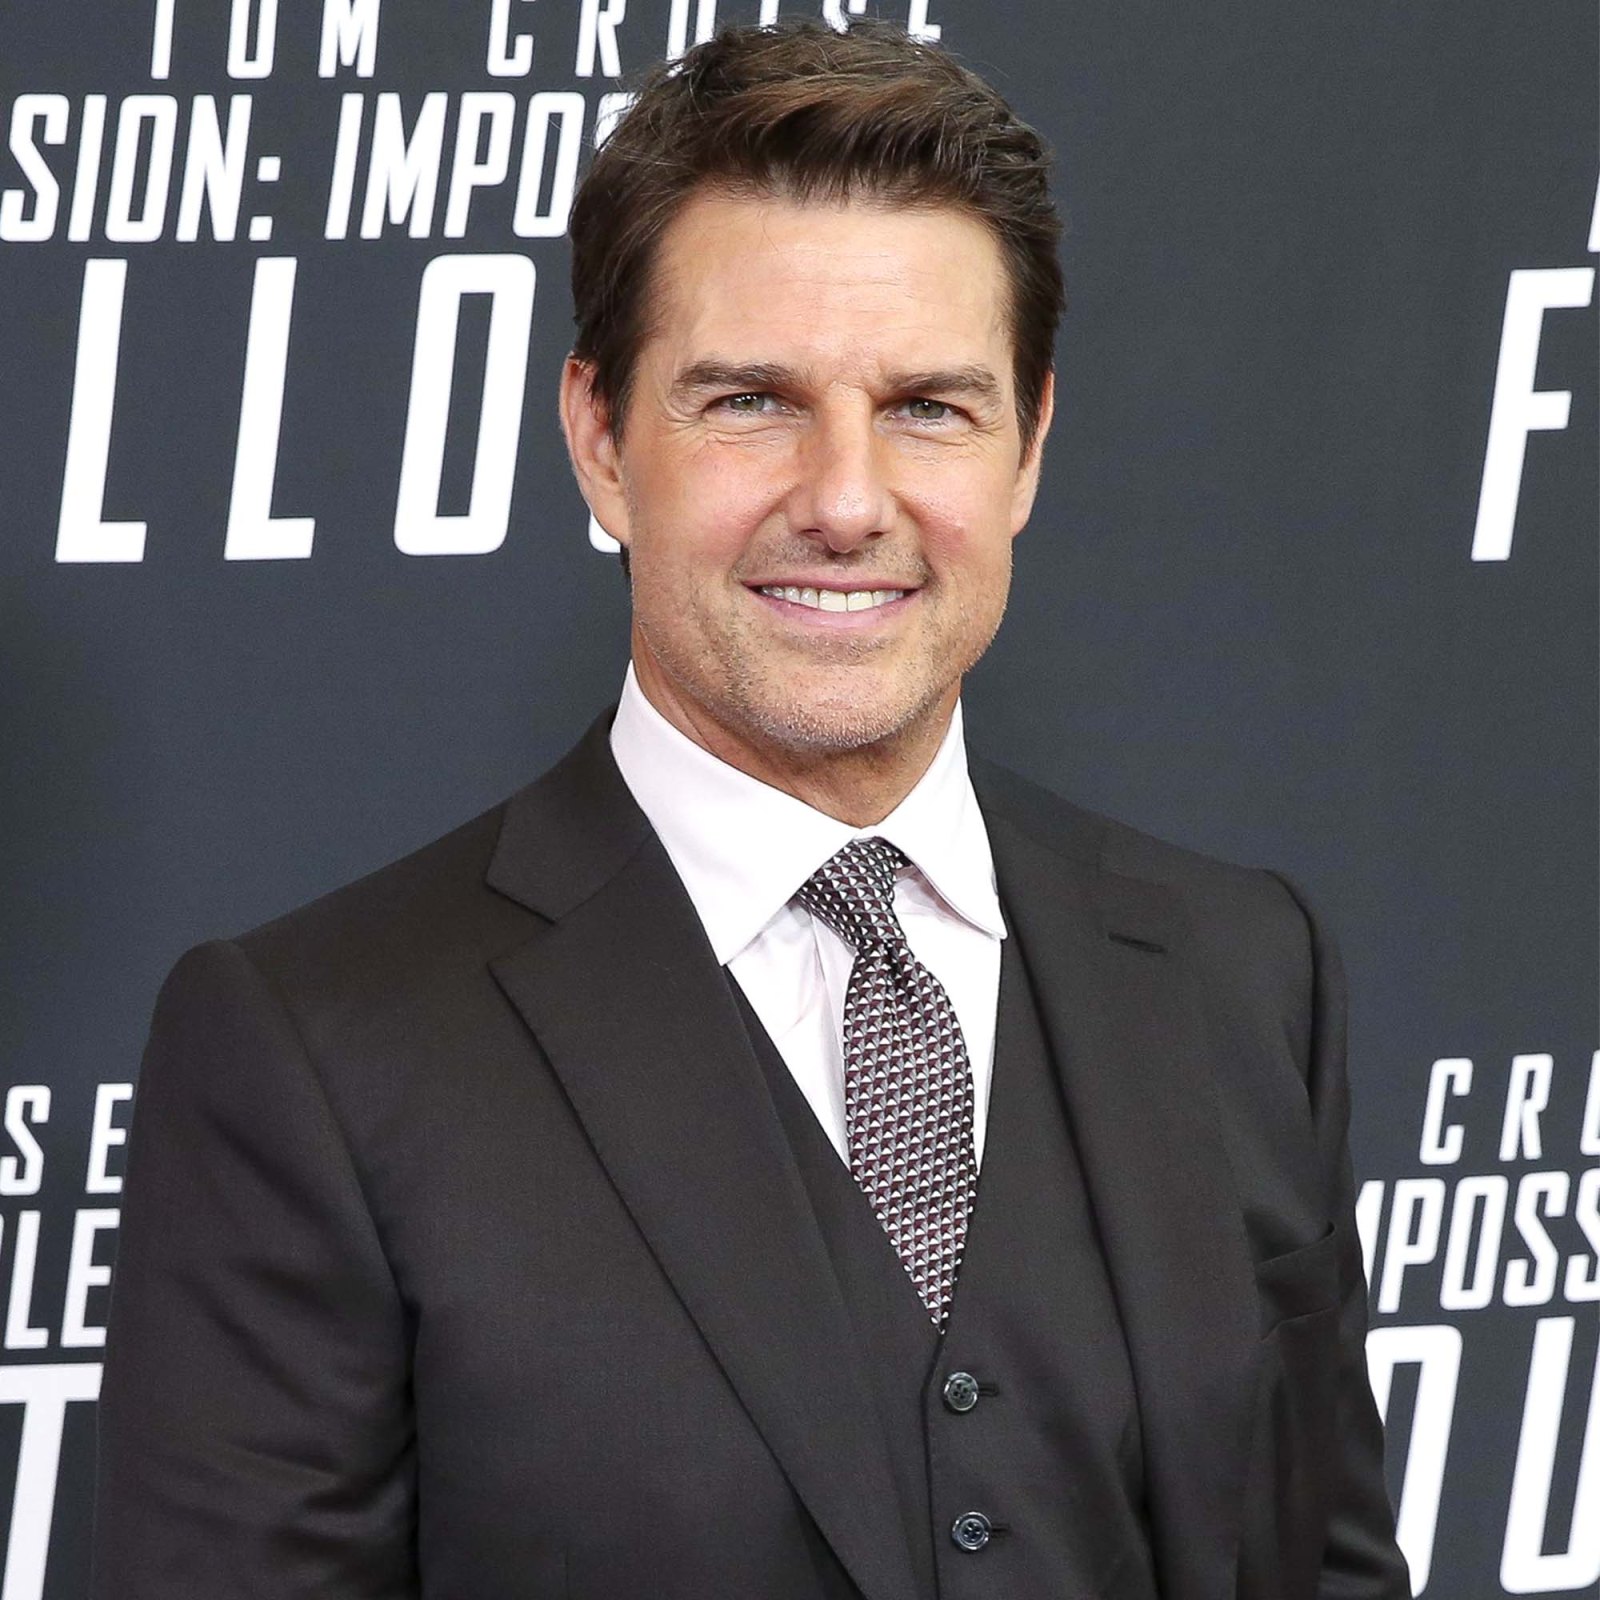 Tom Cruise Surprises Ohio State Band With Top Gun Maverick Screening